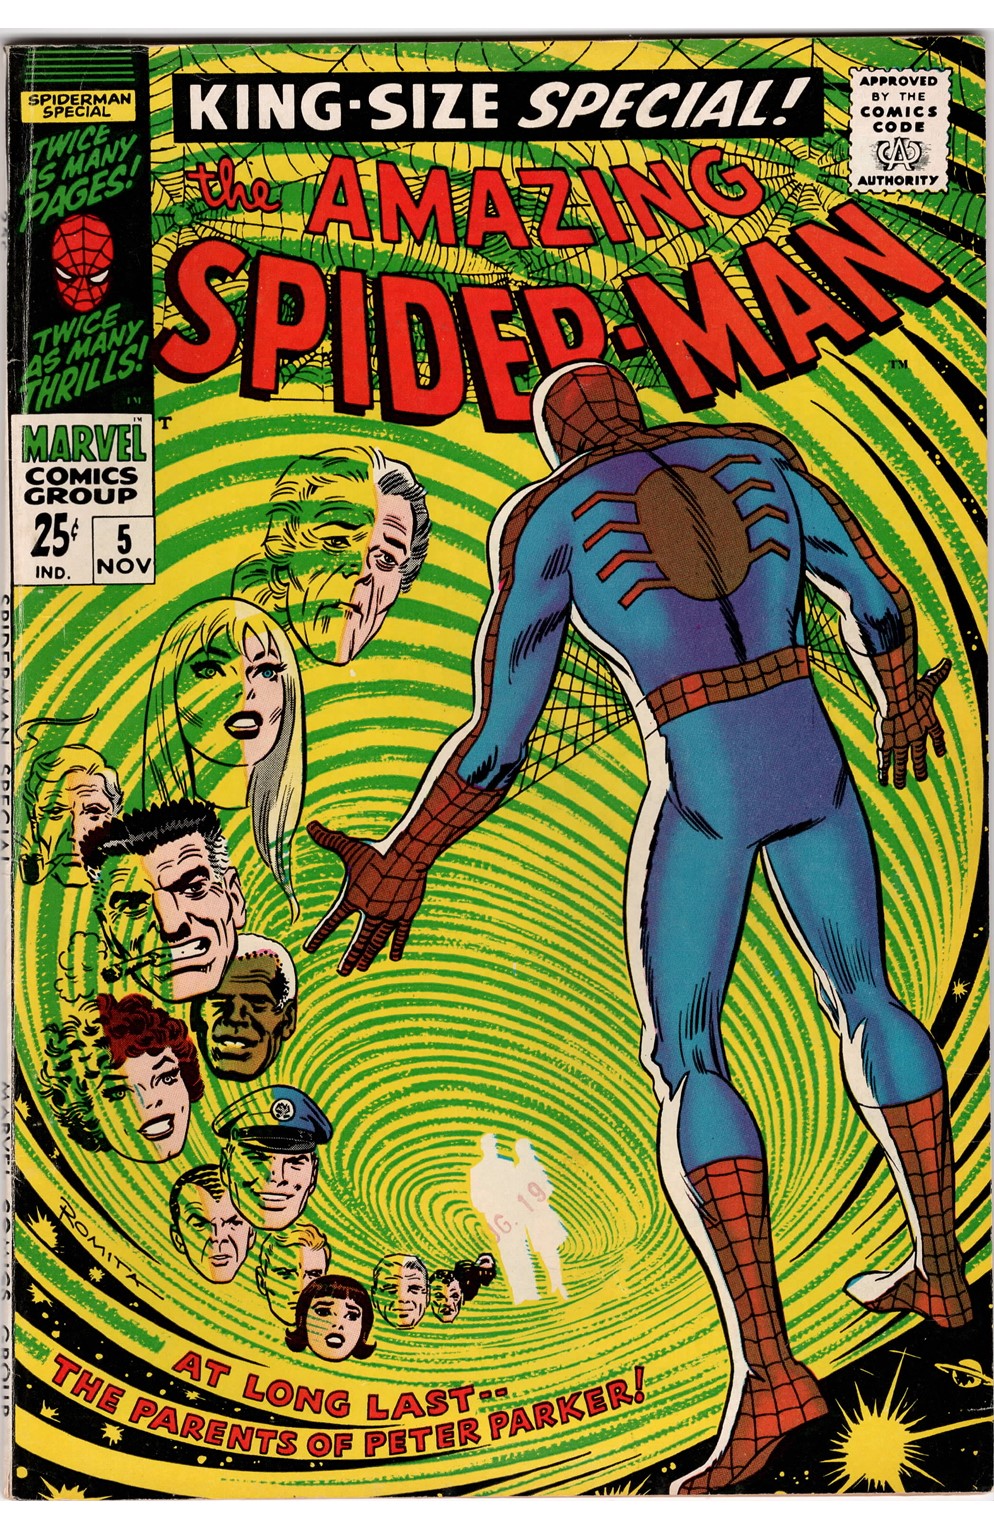 Amazing Spider-Man Special #5